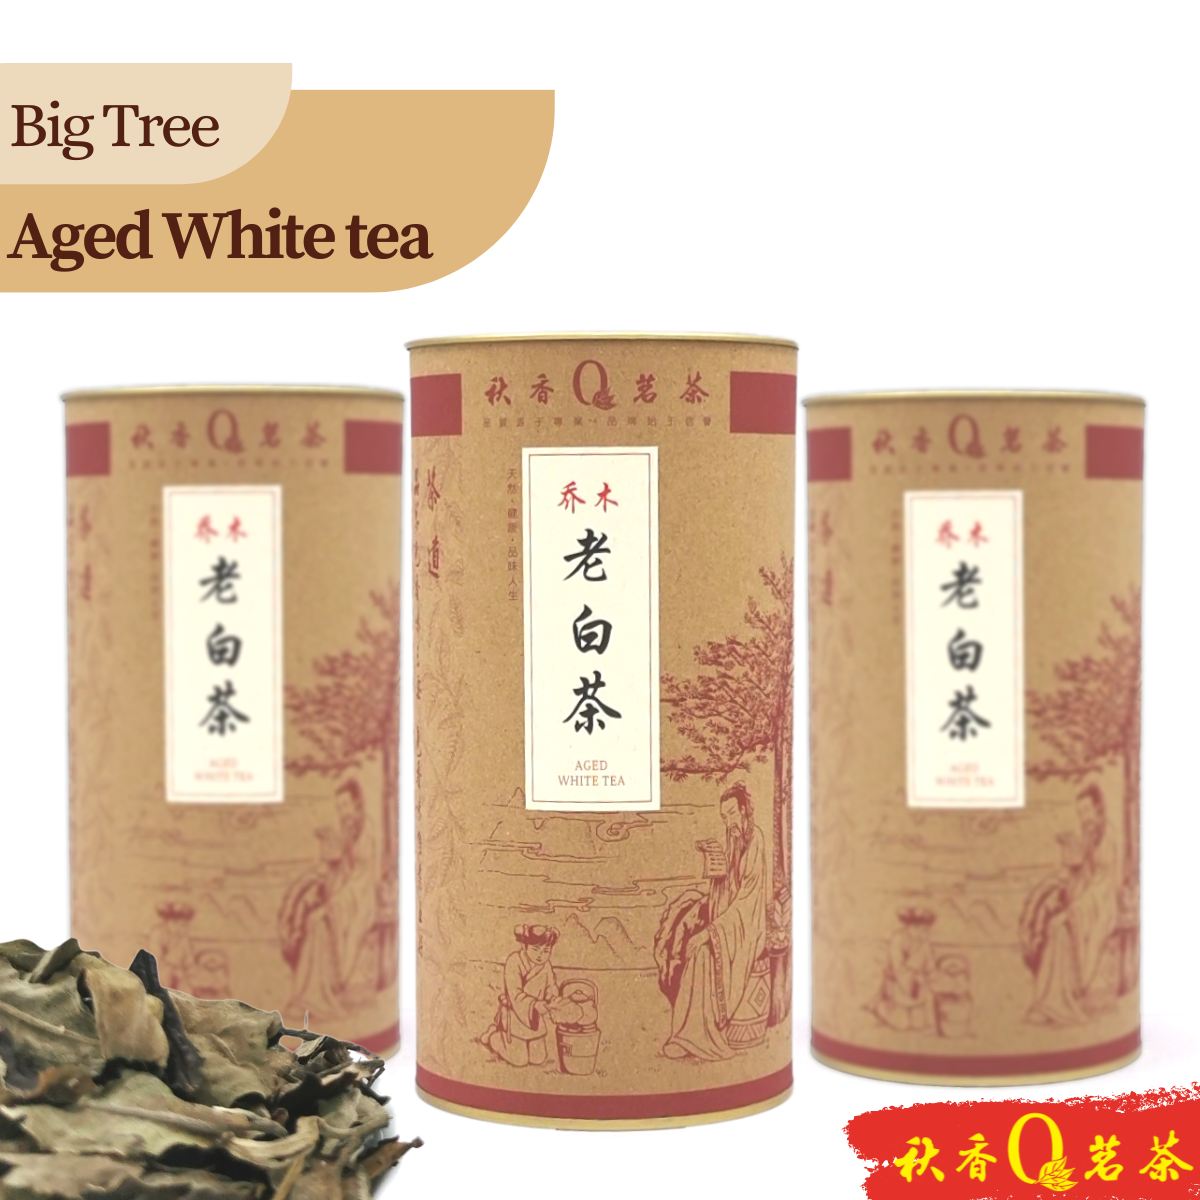 乔木老白茶 Aged White Tea (Big Tree)【100g】【白茶 White Tea】